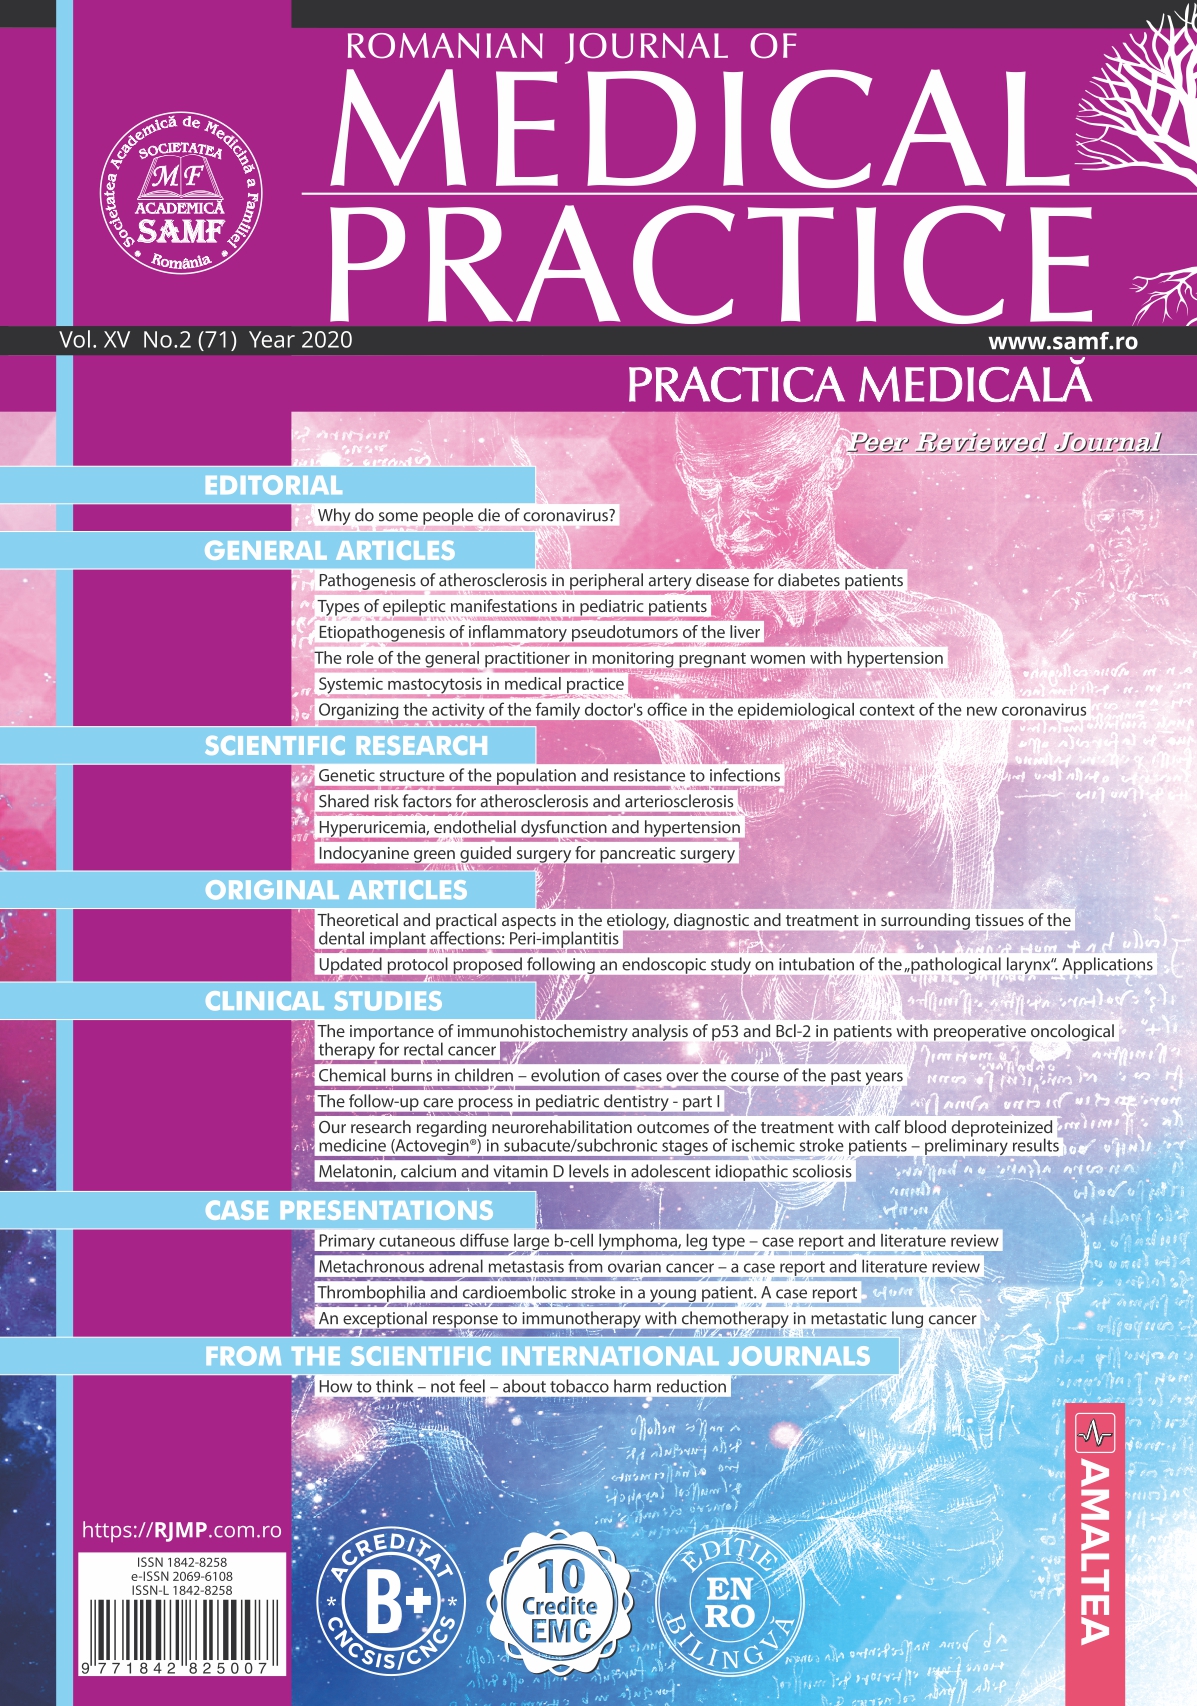 Romanian Journal of Medical Practice | Practica Medicala, Vol. XV, No. 2 (71), 2020